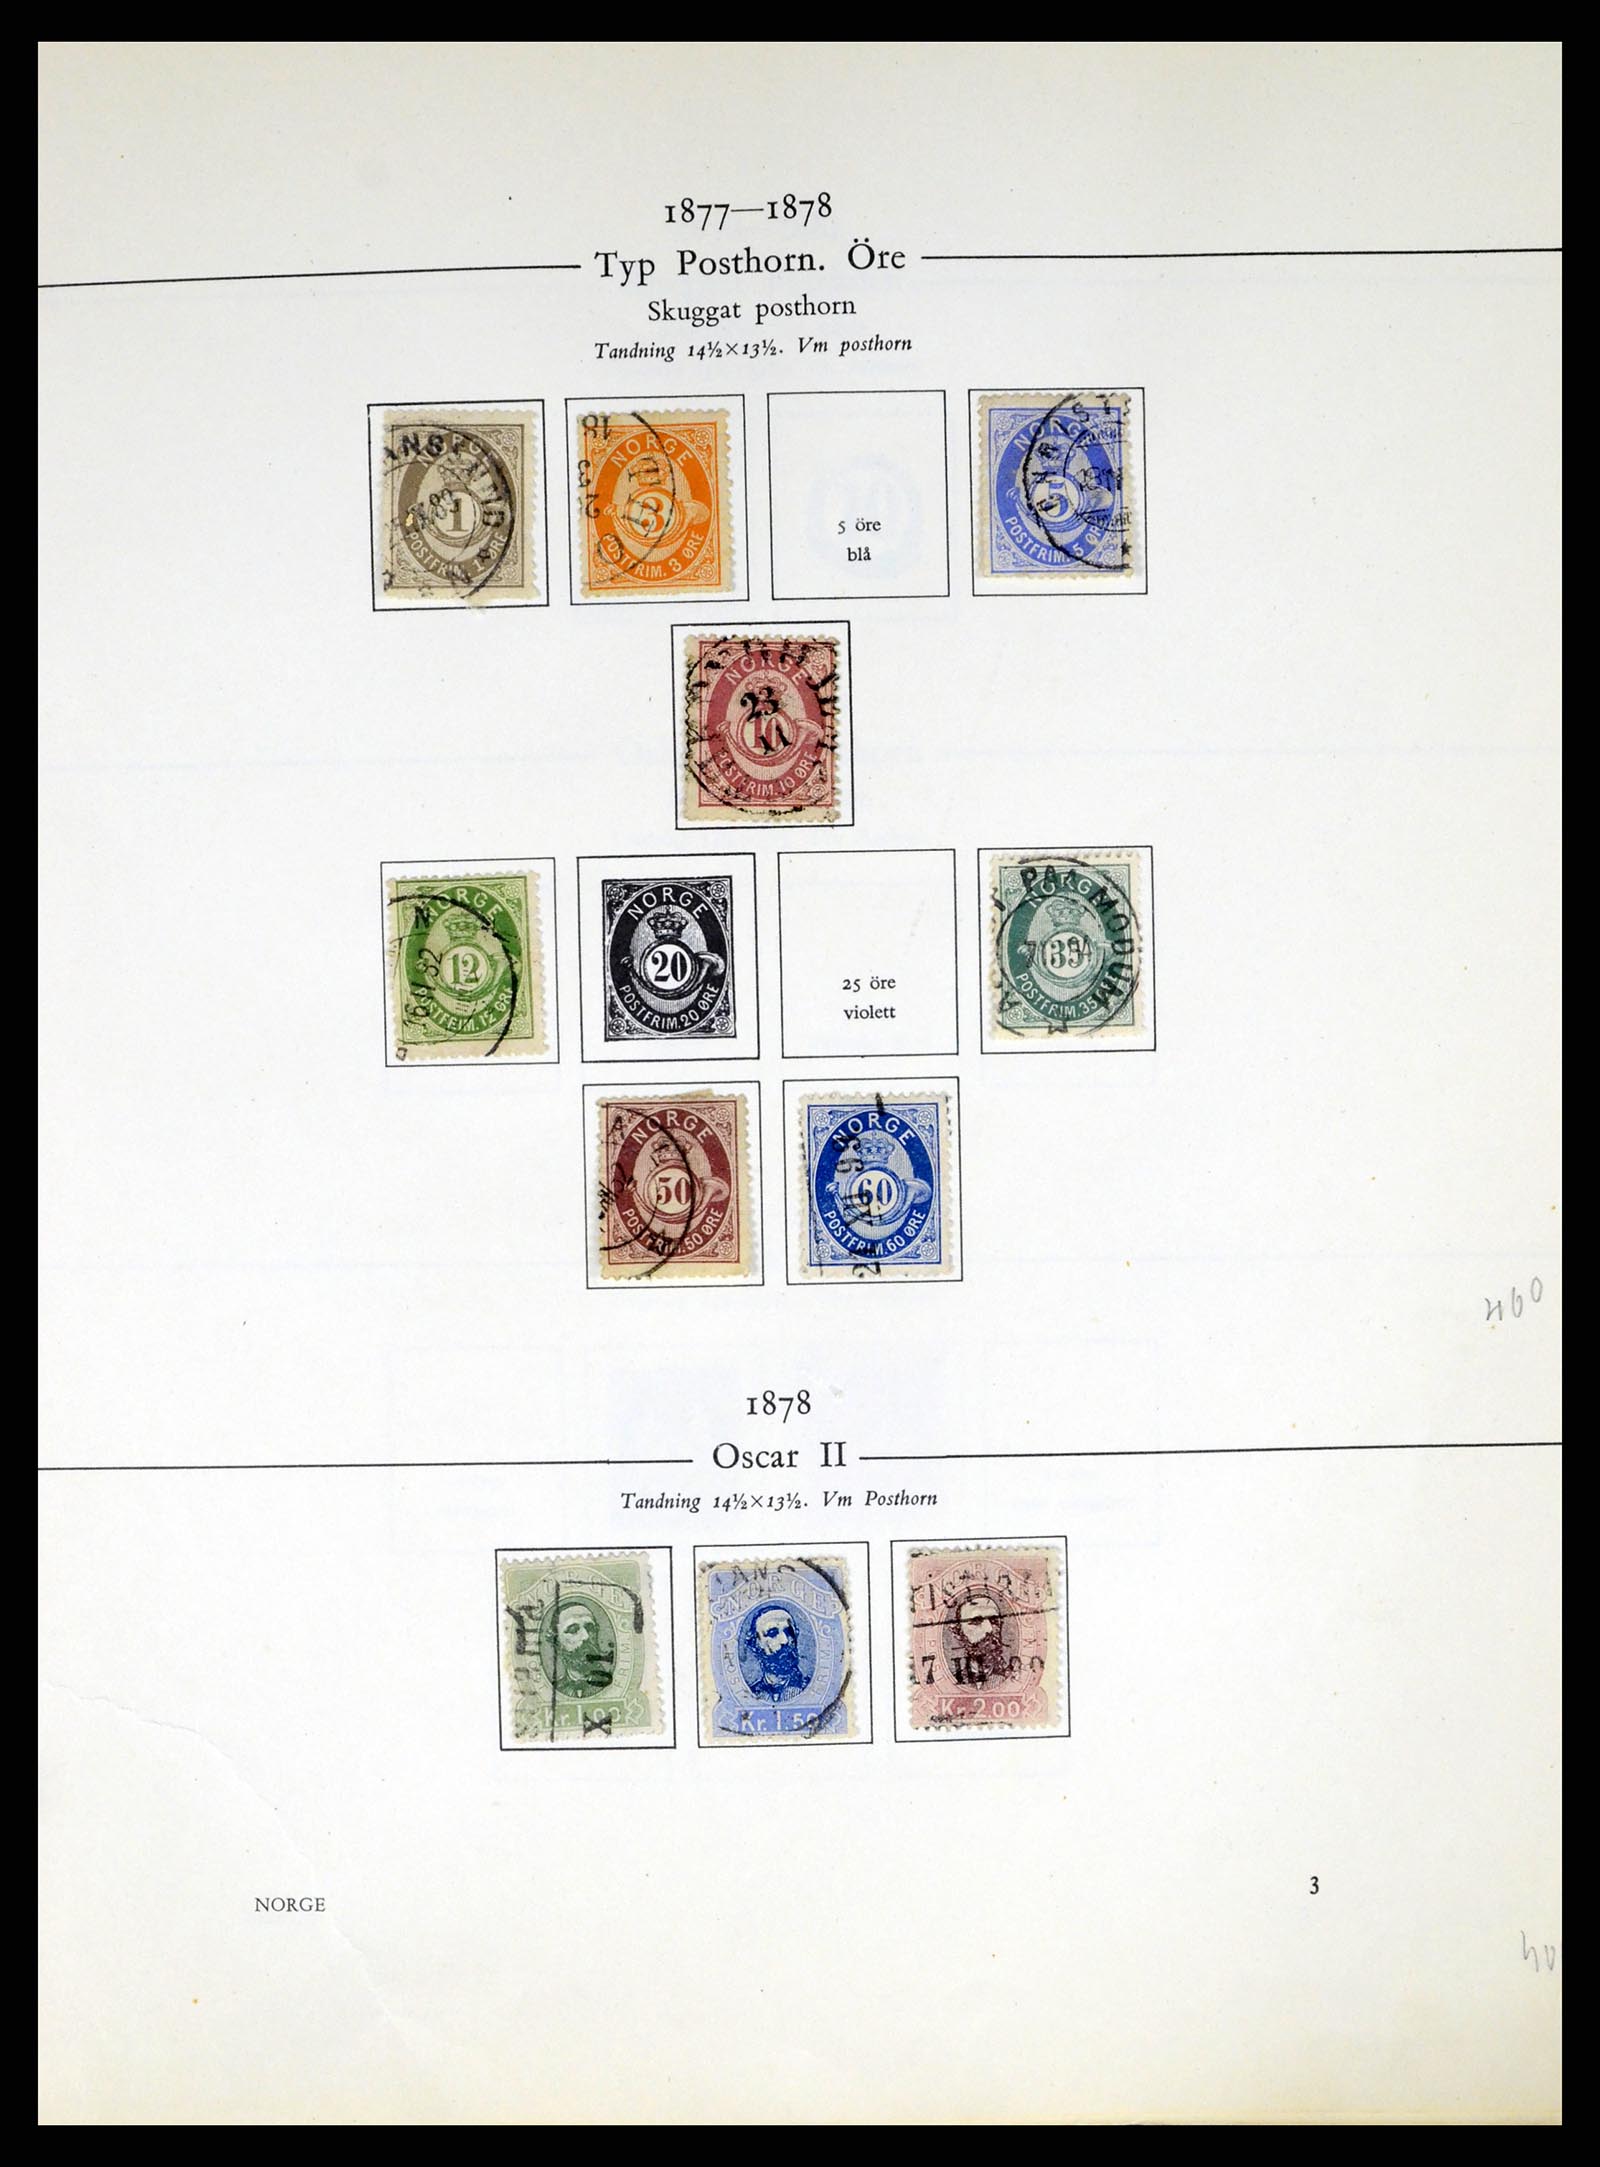 37387 003 - Stamp collection 37387 Scandinavia 1851-1960.